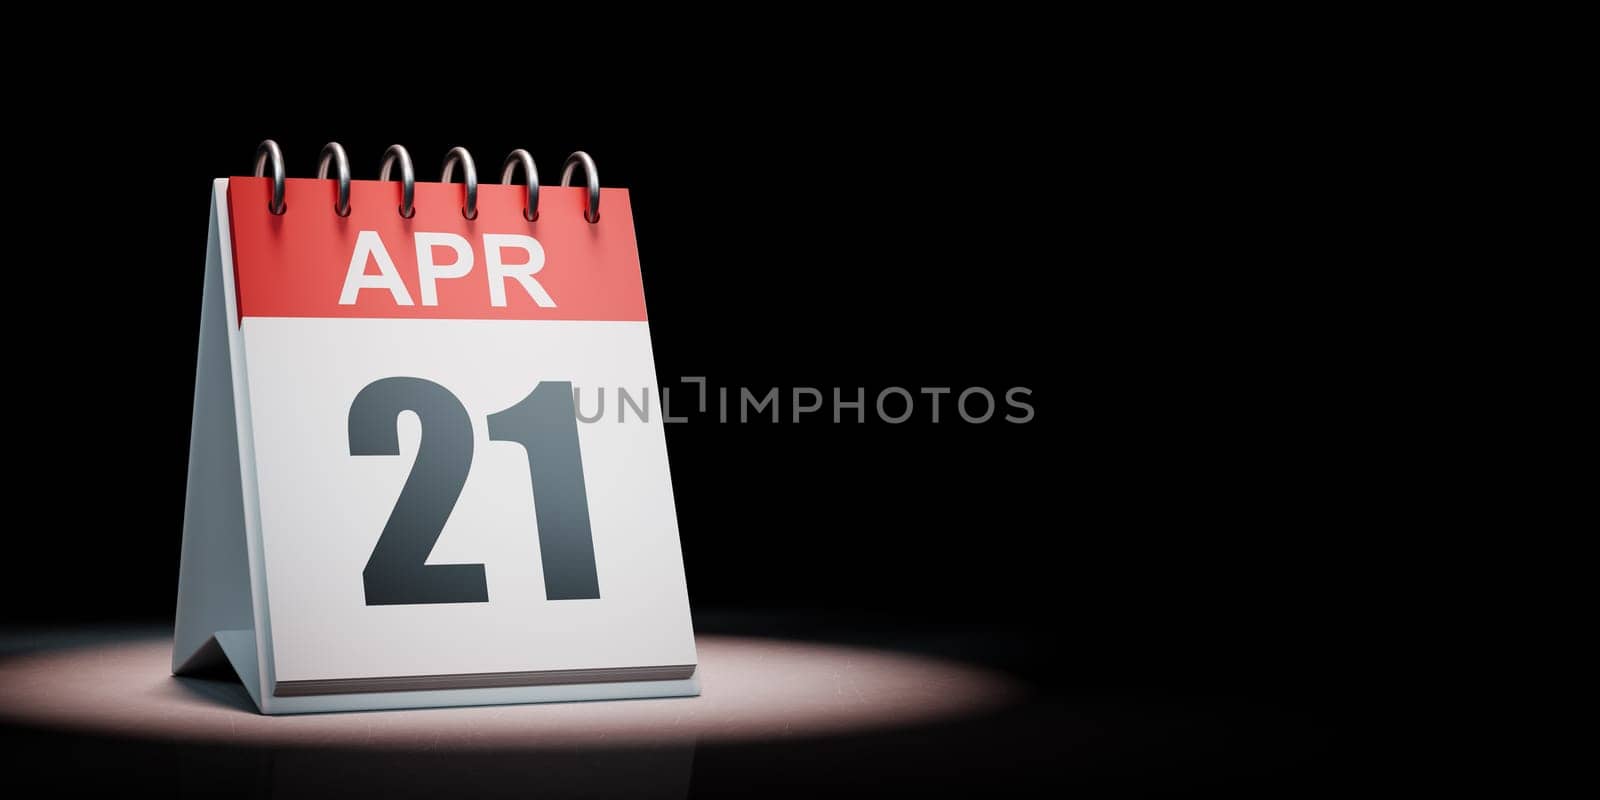 April 21 Calendar Spotlighted on Black Background by make